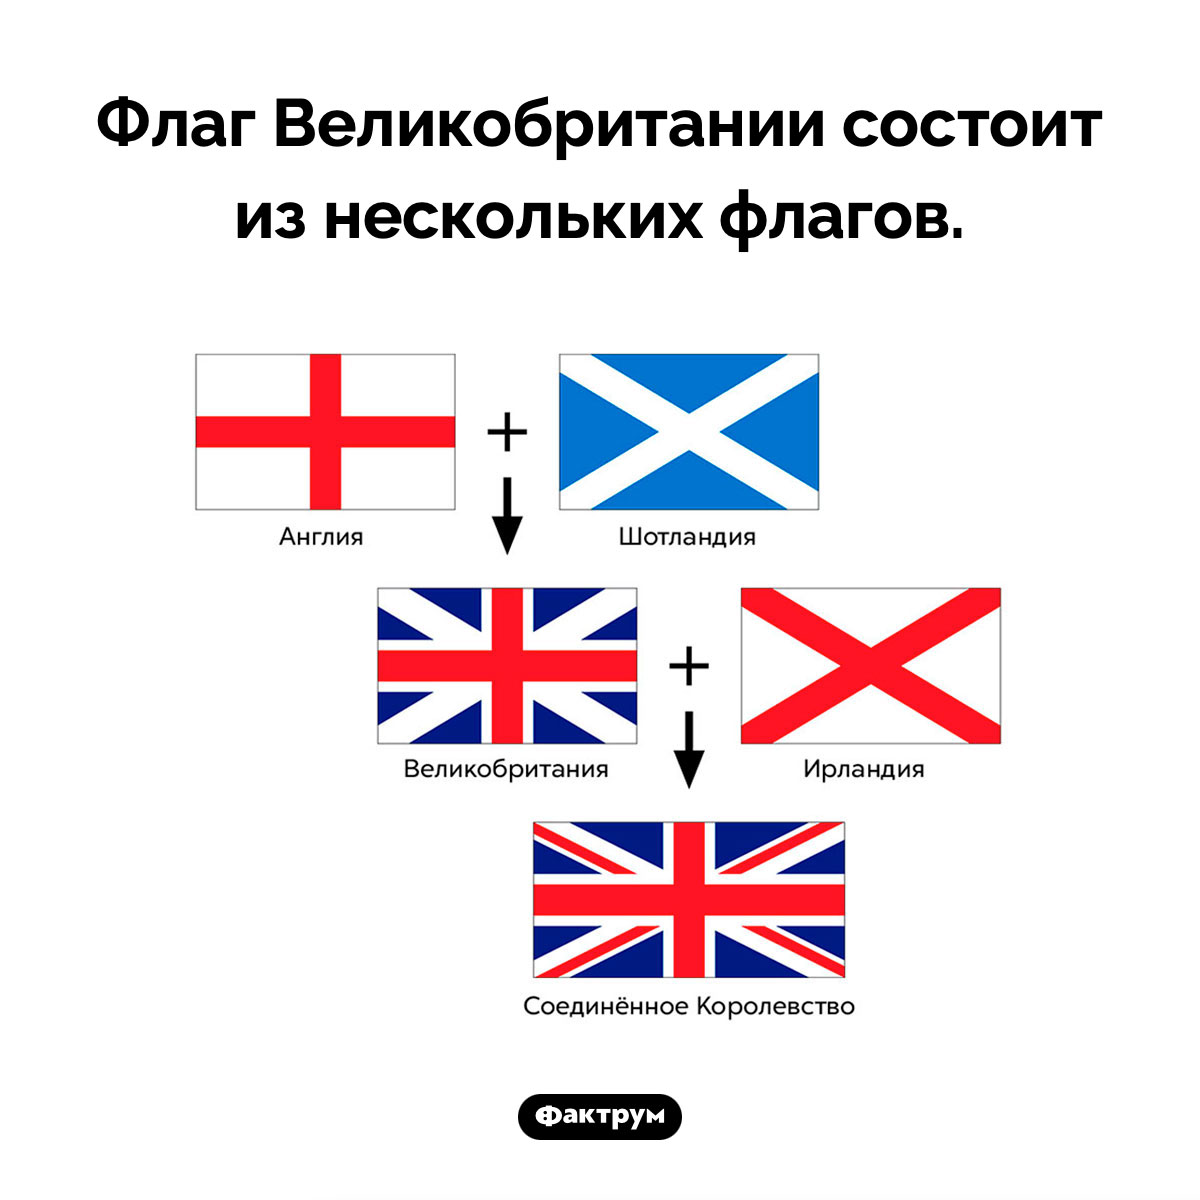 Дизайн флага Великобритании. Флаг Великобритании состоит из нескольких флагов.